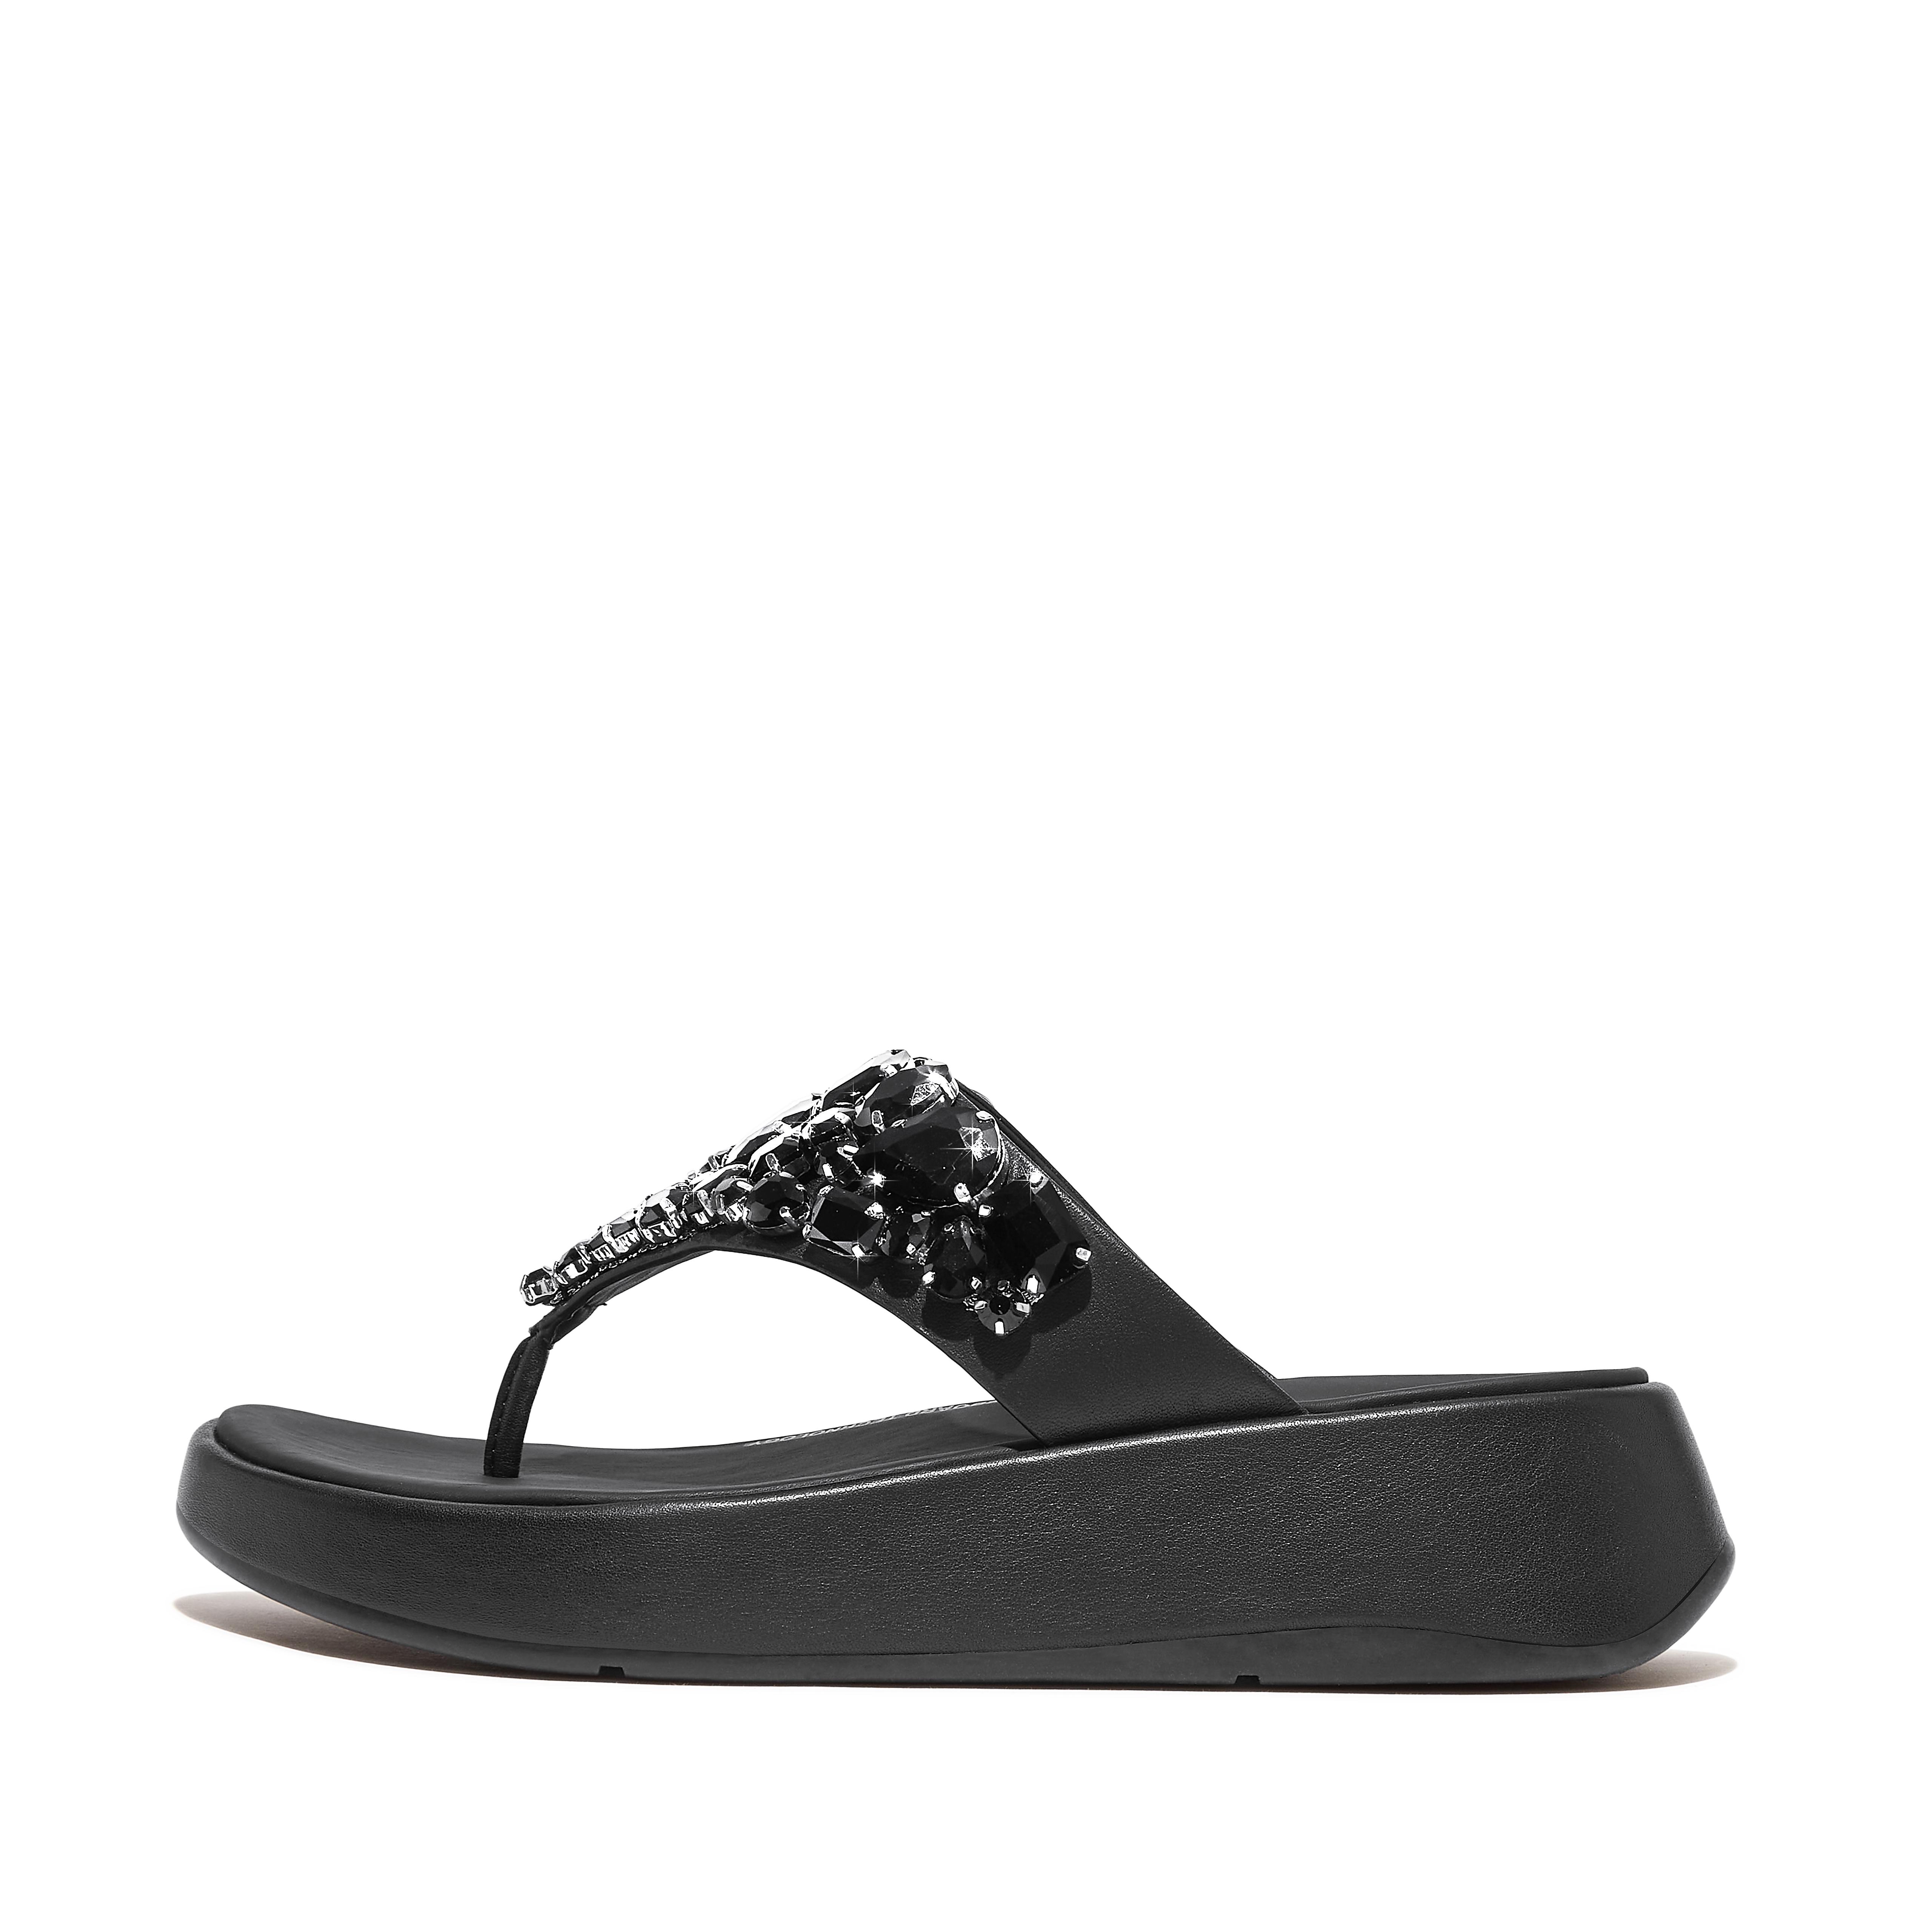 Fitflop Jewel-Deluxe Leather Flatform Toe-Post Sandals,Black